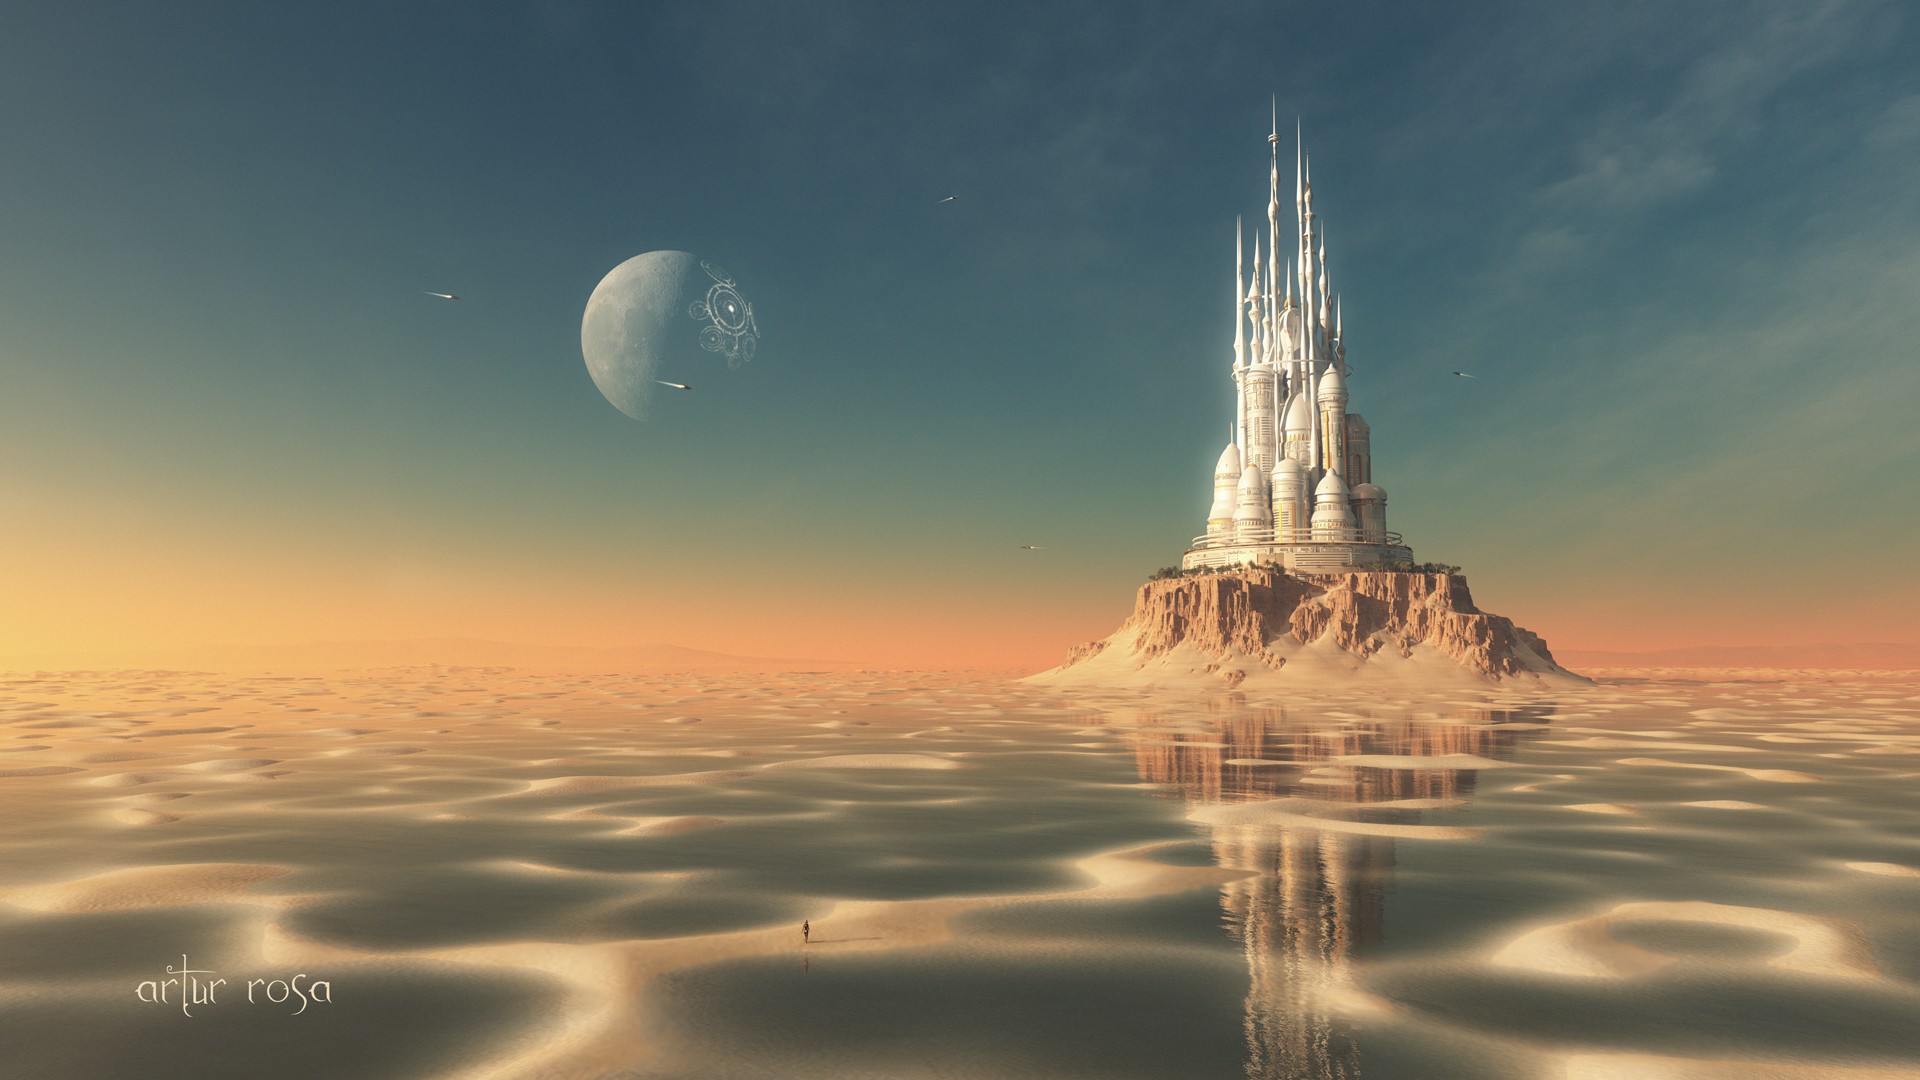 General 1920x1080 fantasy art sky futuristic science fiction planet building Artur Rosa digital art